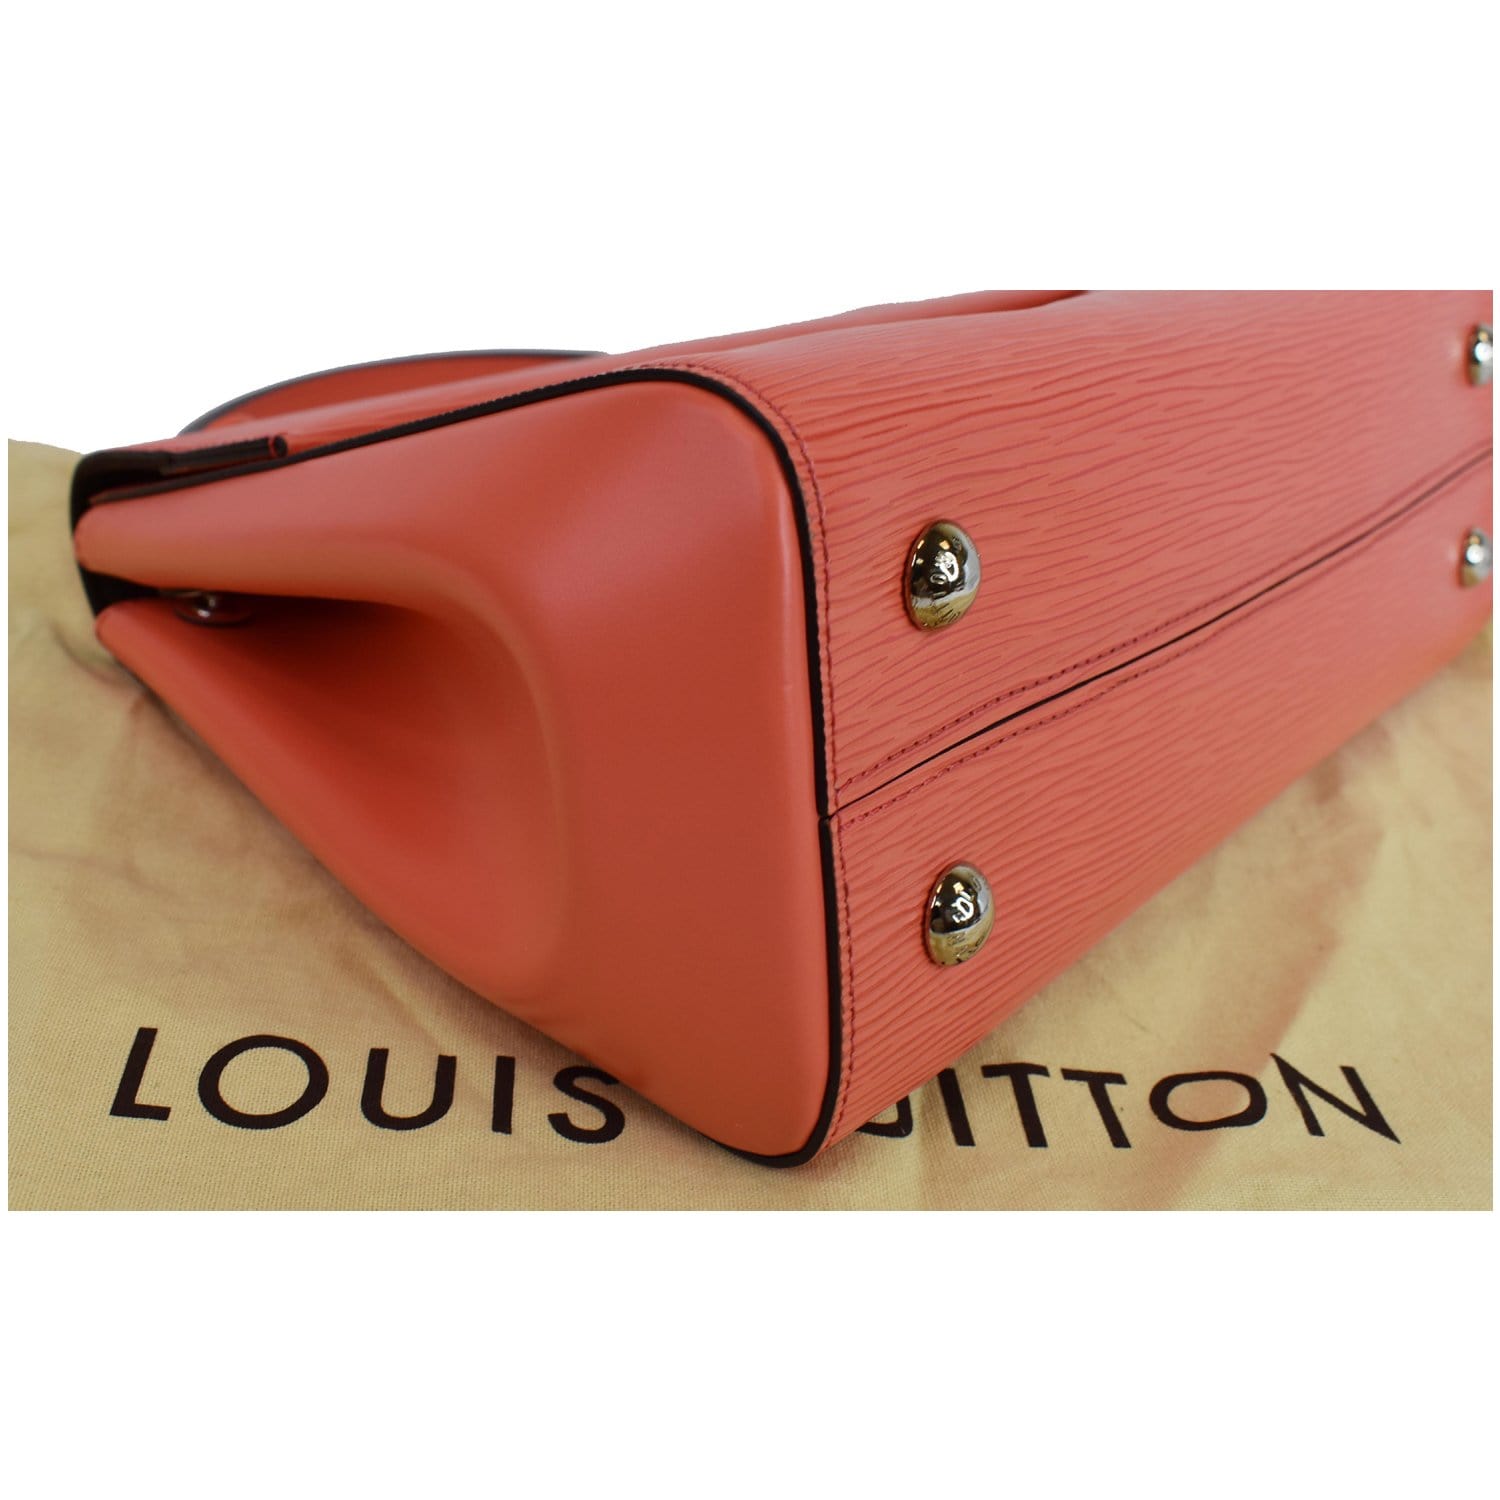 Authentic Louis Vuitton Poppy Epi Leather Alma BB Bag Handbag with Strap